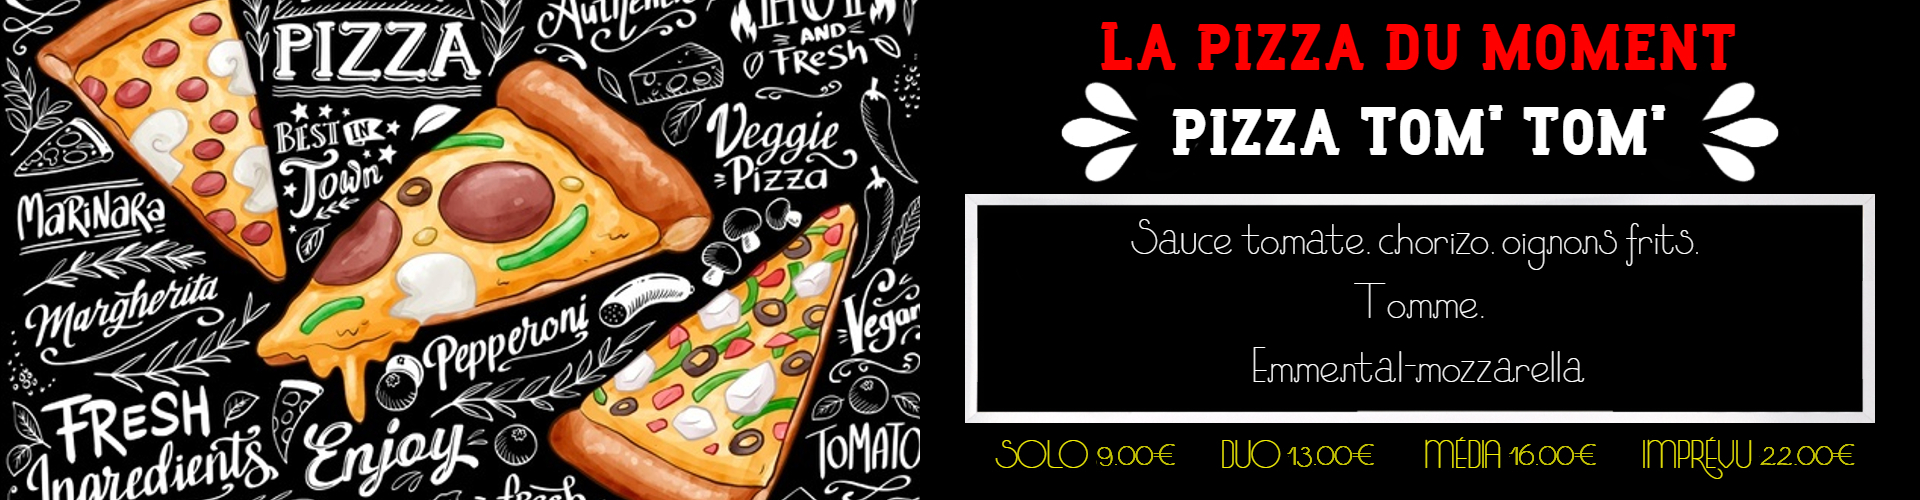 pizza-tom-tom-moulin-a-pizzas-bain-de-bretagne-5